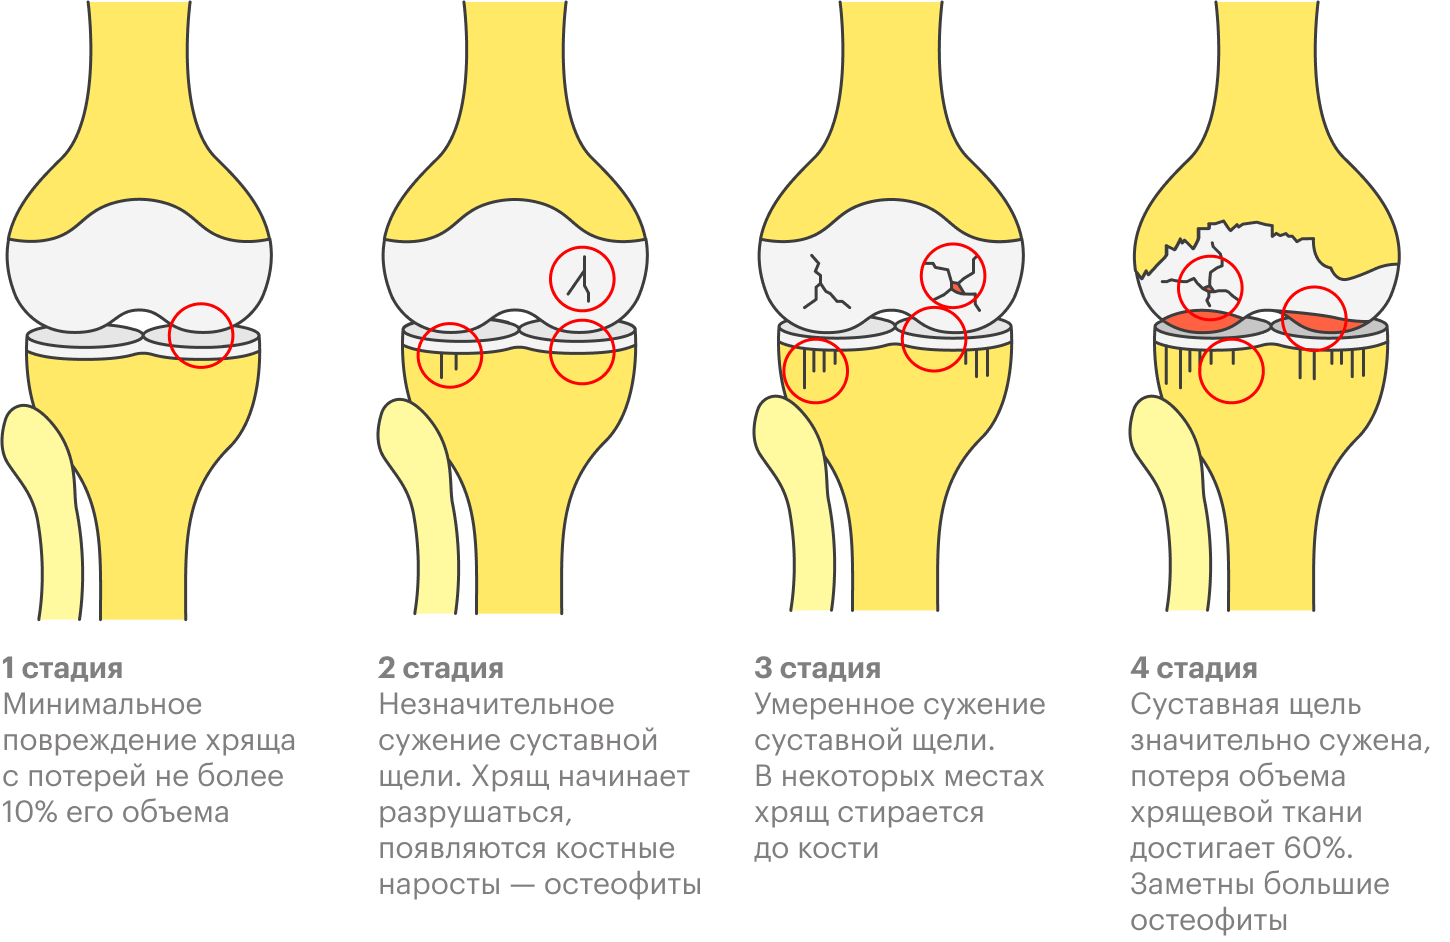 Стадии развития остеоартроза